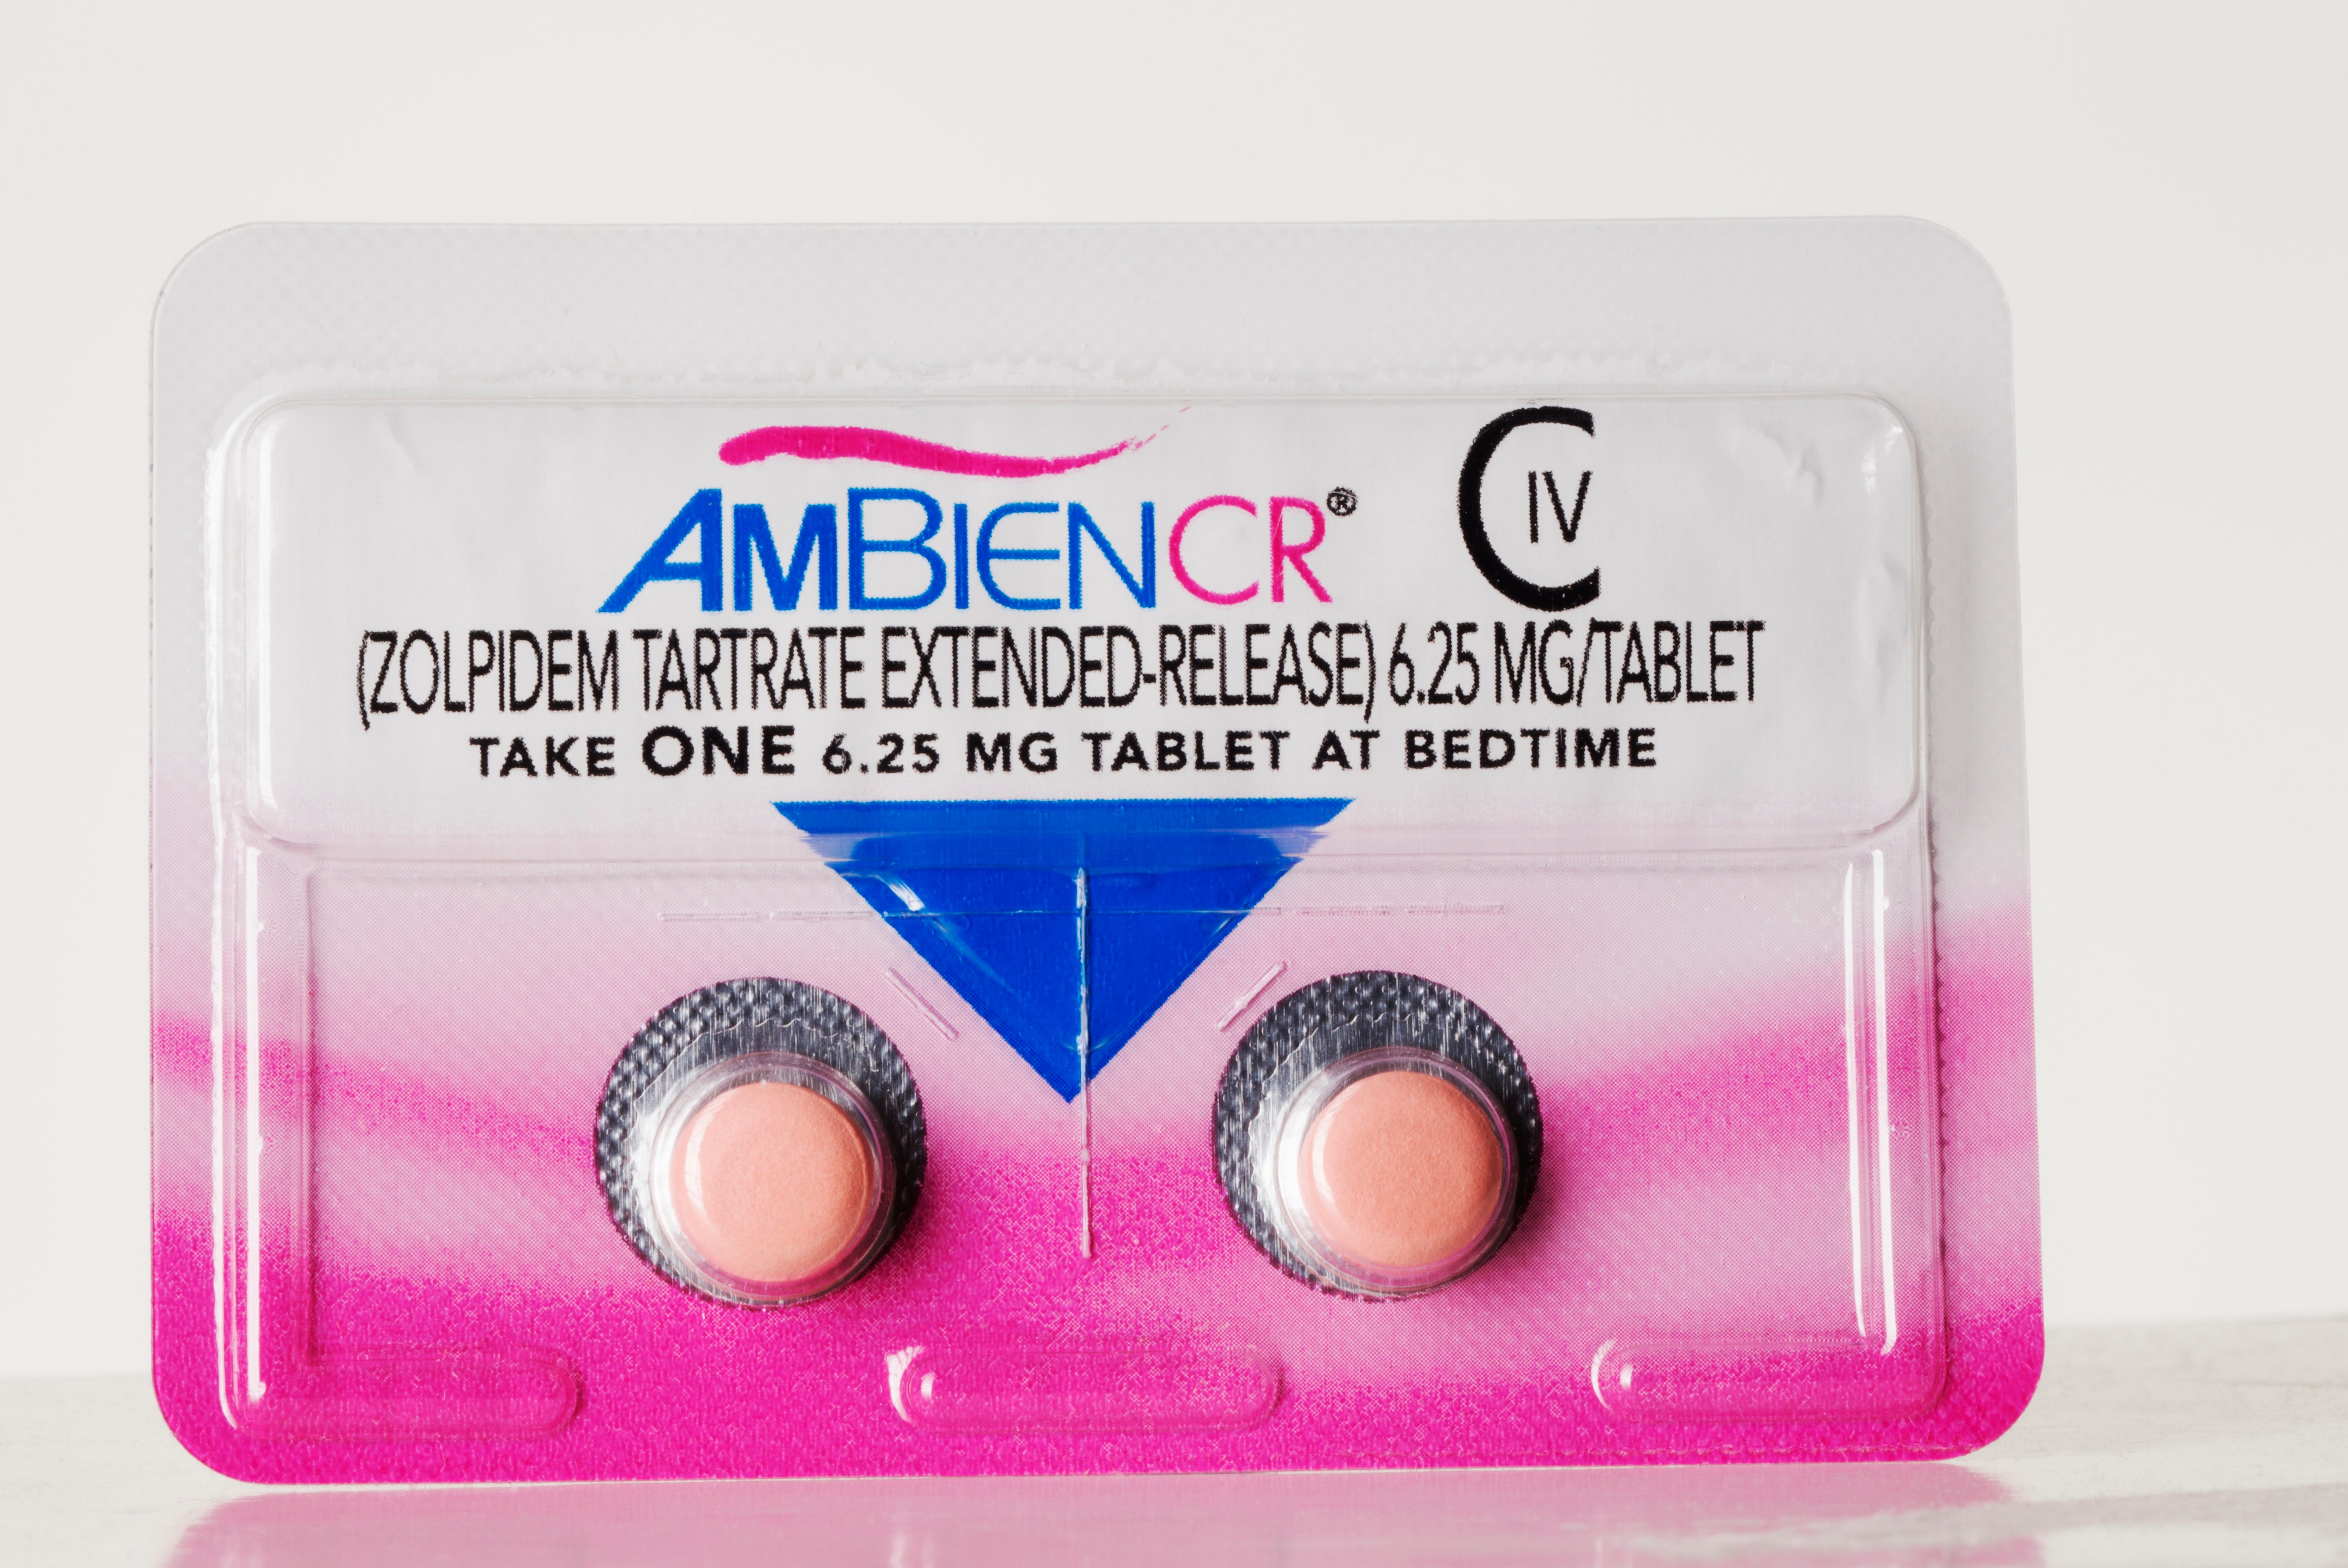 Ambien Other Sleep Aids Get Fdas Black Box Warning Label Fox News 